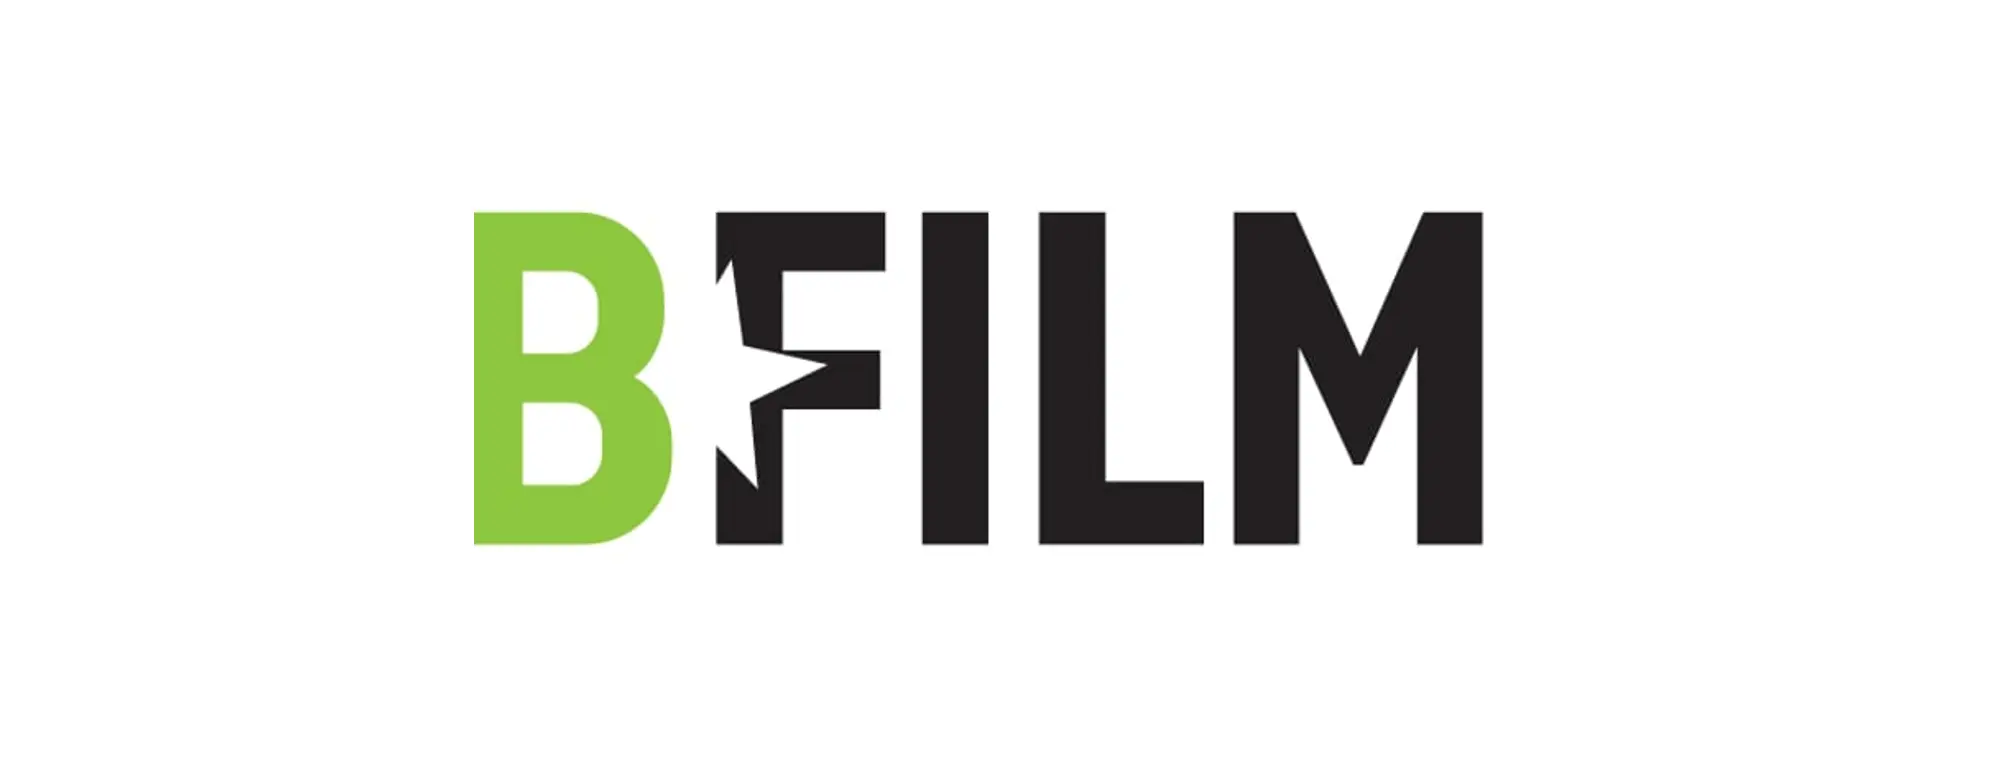 klient-wooacademy-bfilm-logo